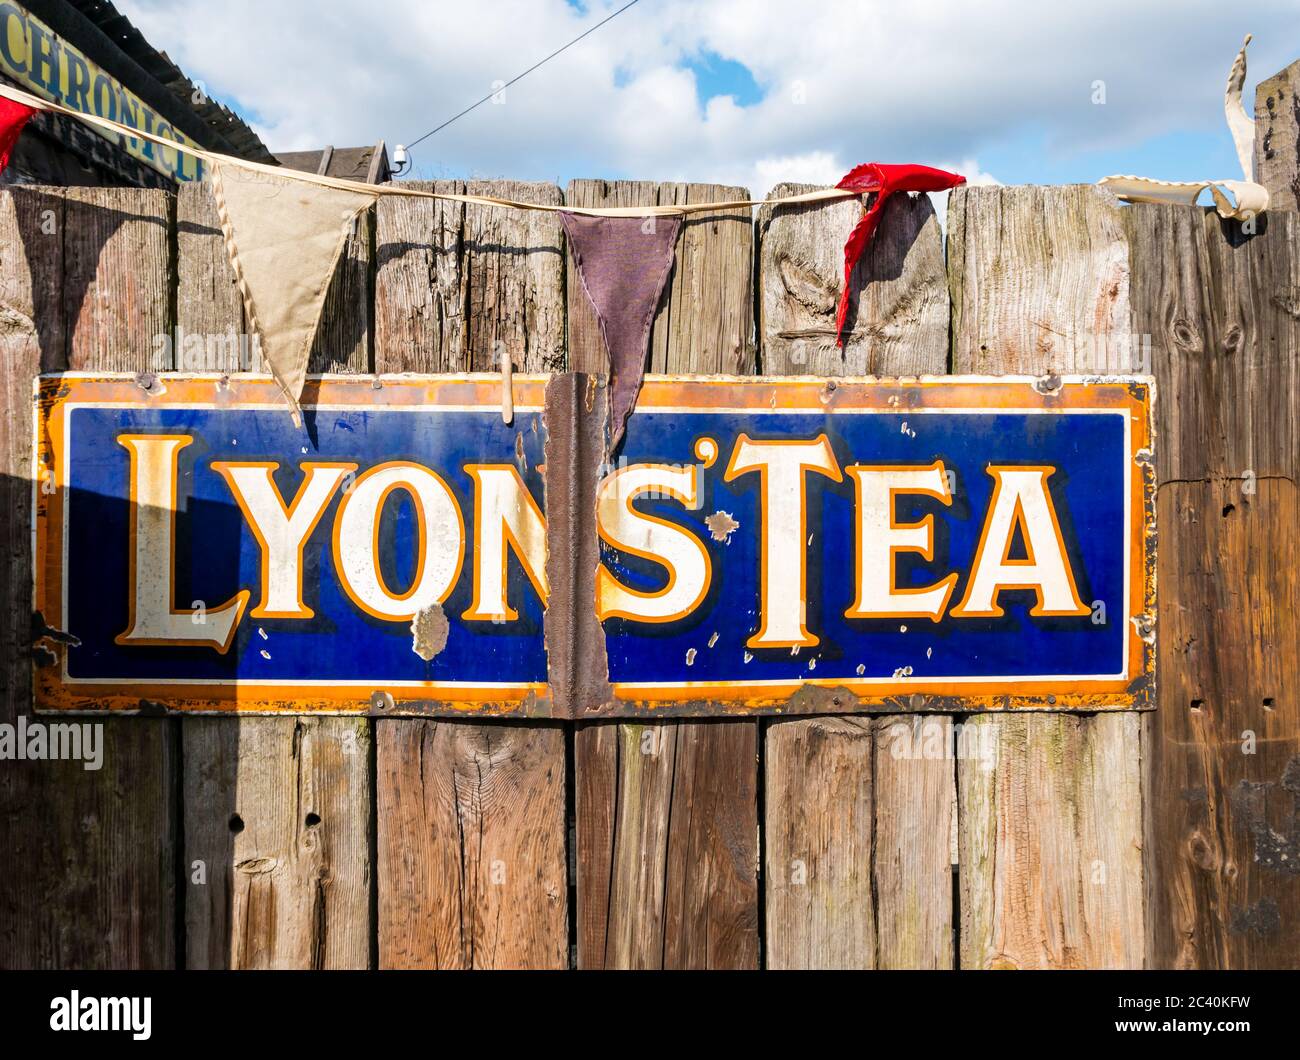 Old fashioned vintage Lyons' Tea advertising sign on wooden fence, England, UK Stock Photo